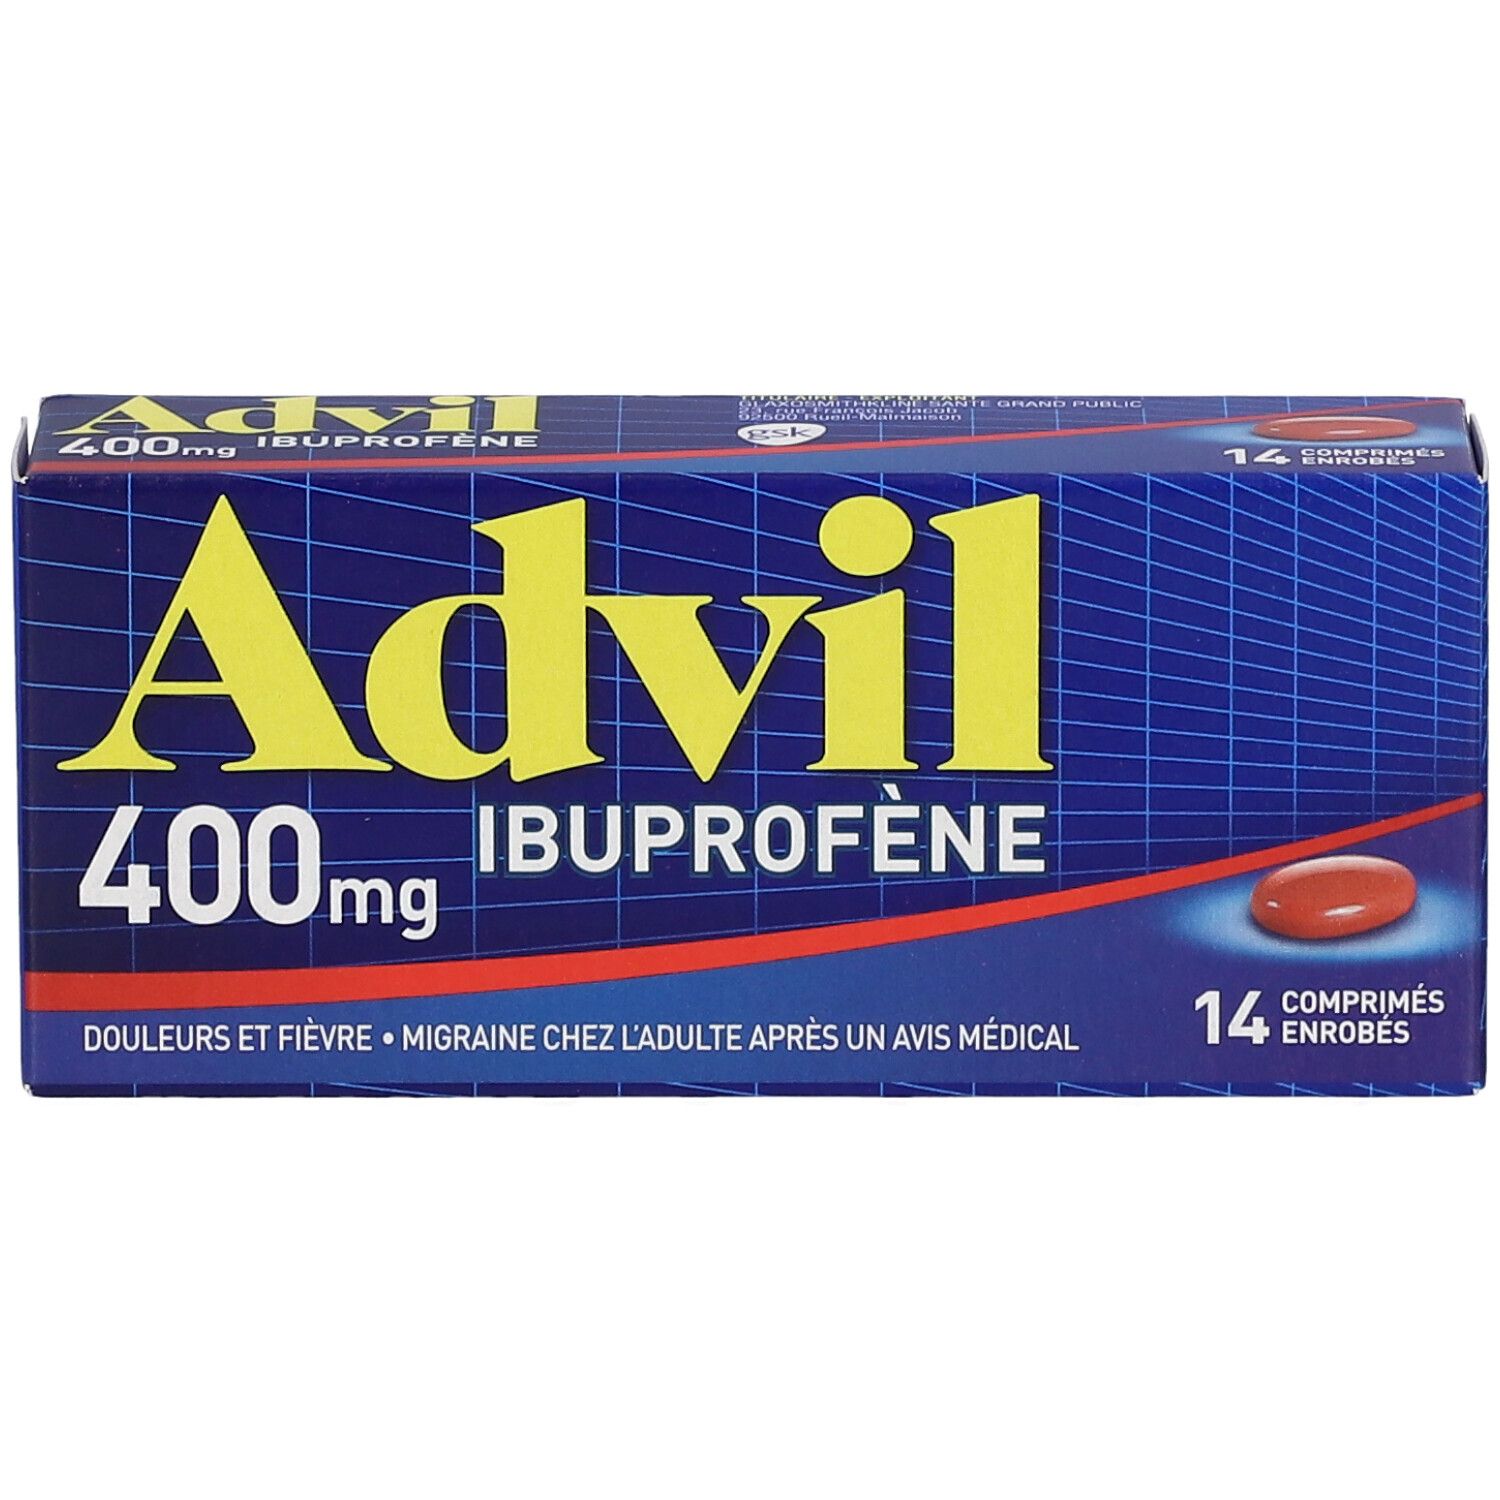 Advil® 400 mg